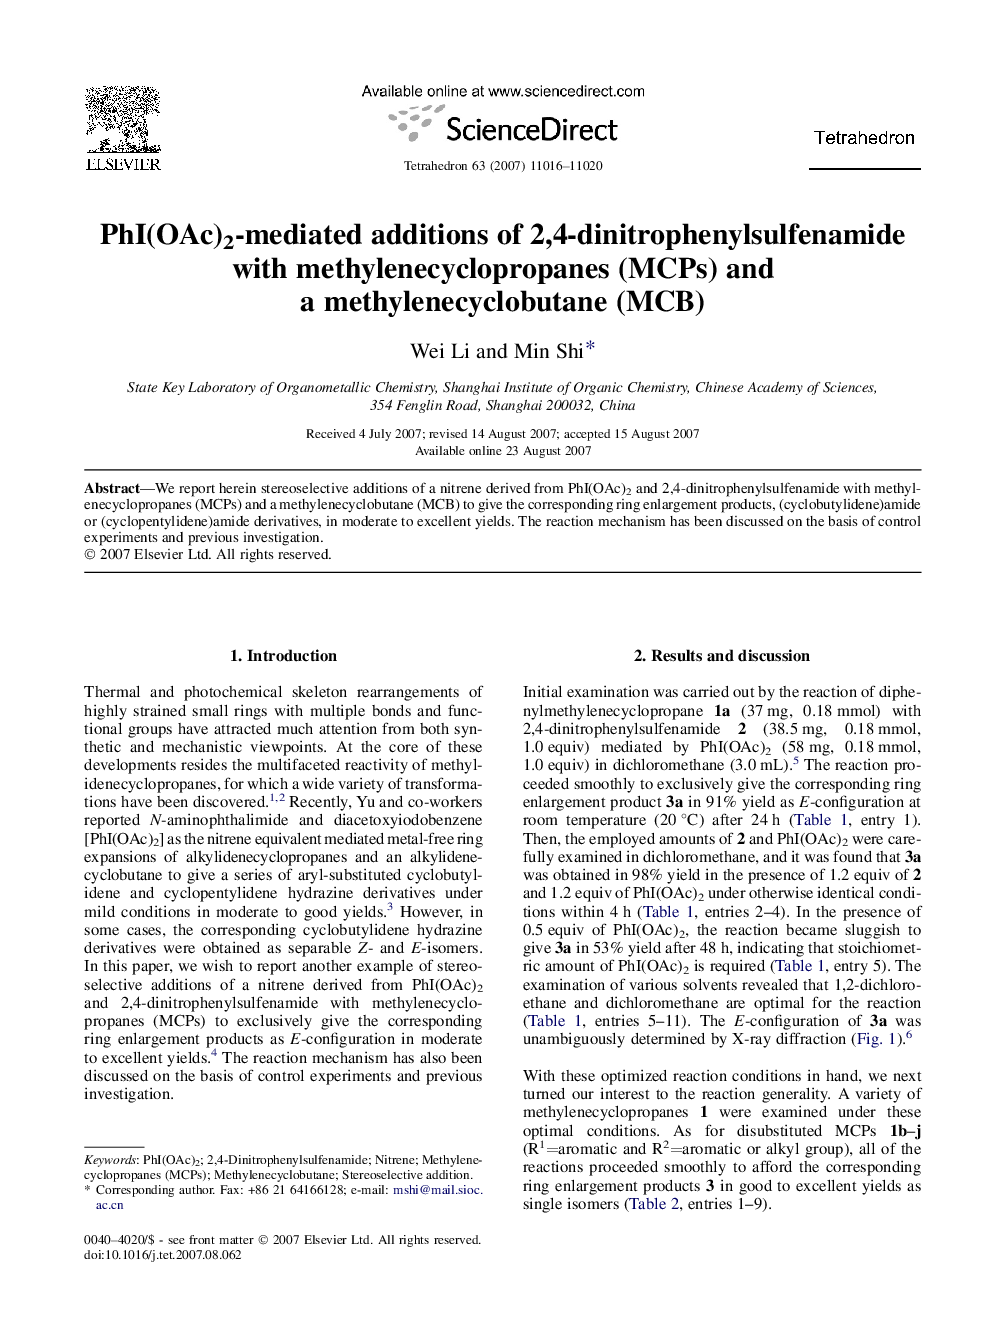 PhI(OAc)2-mediated additions of 2,4-dinitrophenylsulfenamide with methylenecyclopropanes (MCPs) and a methylenecyclobutane (MCB)